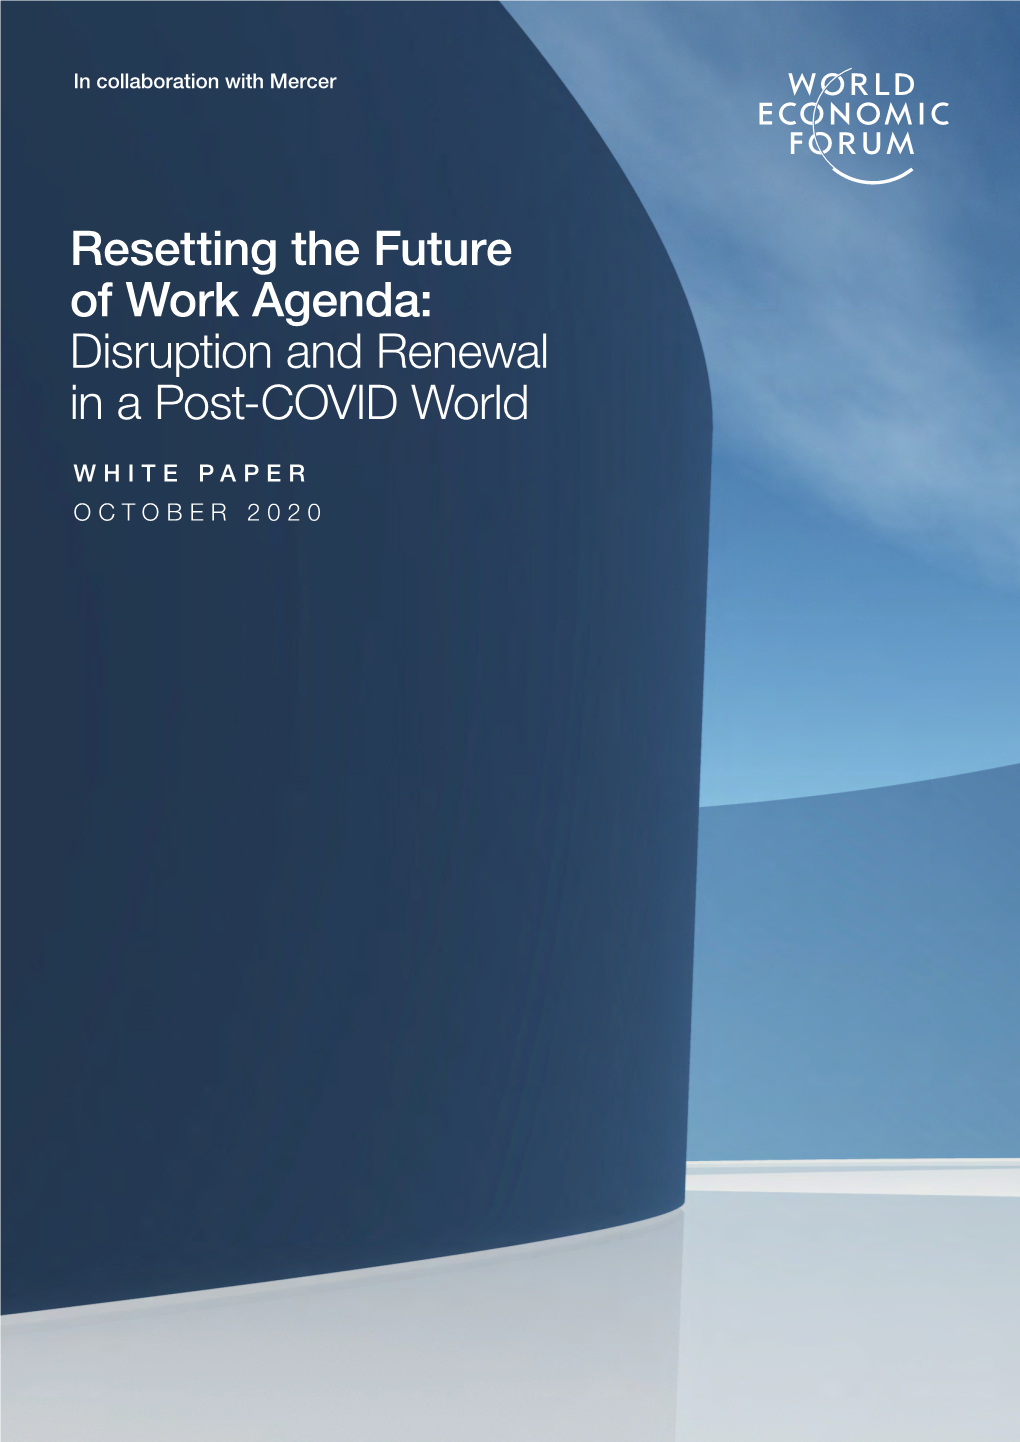 Resetting the Future of Work Agenda – in a Post-Covid World